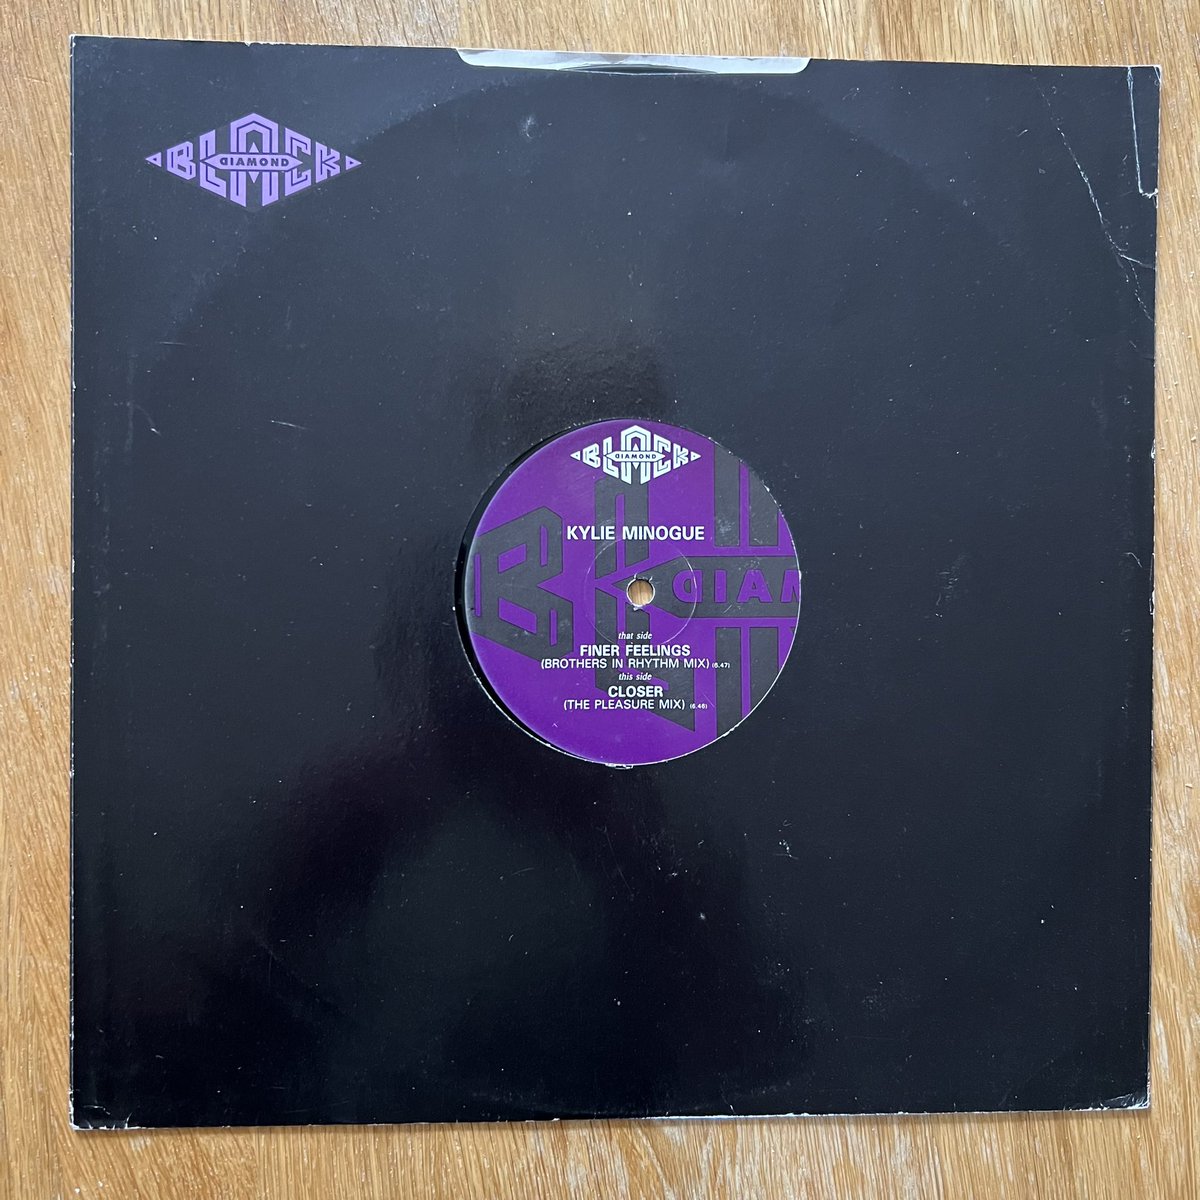 Gorgeous find! @kylieminogue Finer Feelings (Brothers in Rhythm Mix) / Closer (The Pleasure Mix) Black Diamond @PWLHitFactory 12” promo. @MrSteveAnderson @daveseaman. #Vinyl #VinylCollector
#LimitedEdition #PWLCollection